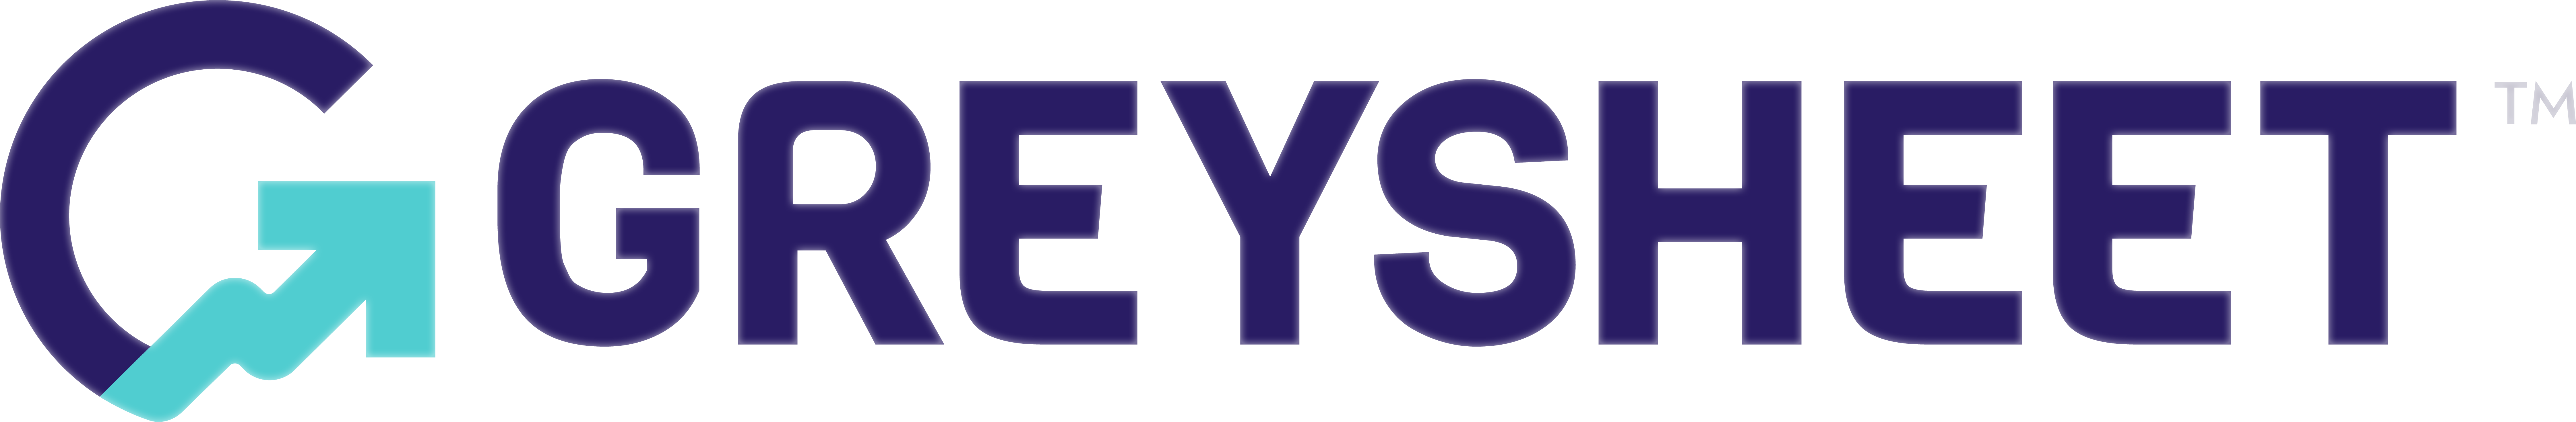 greysheet-logo-color-2020wht